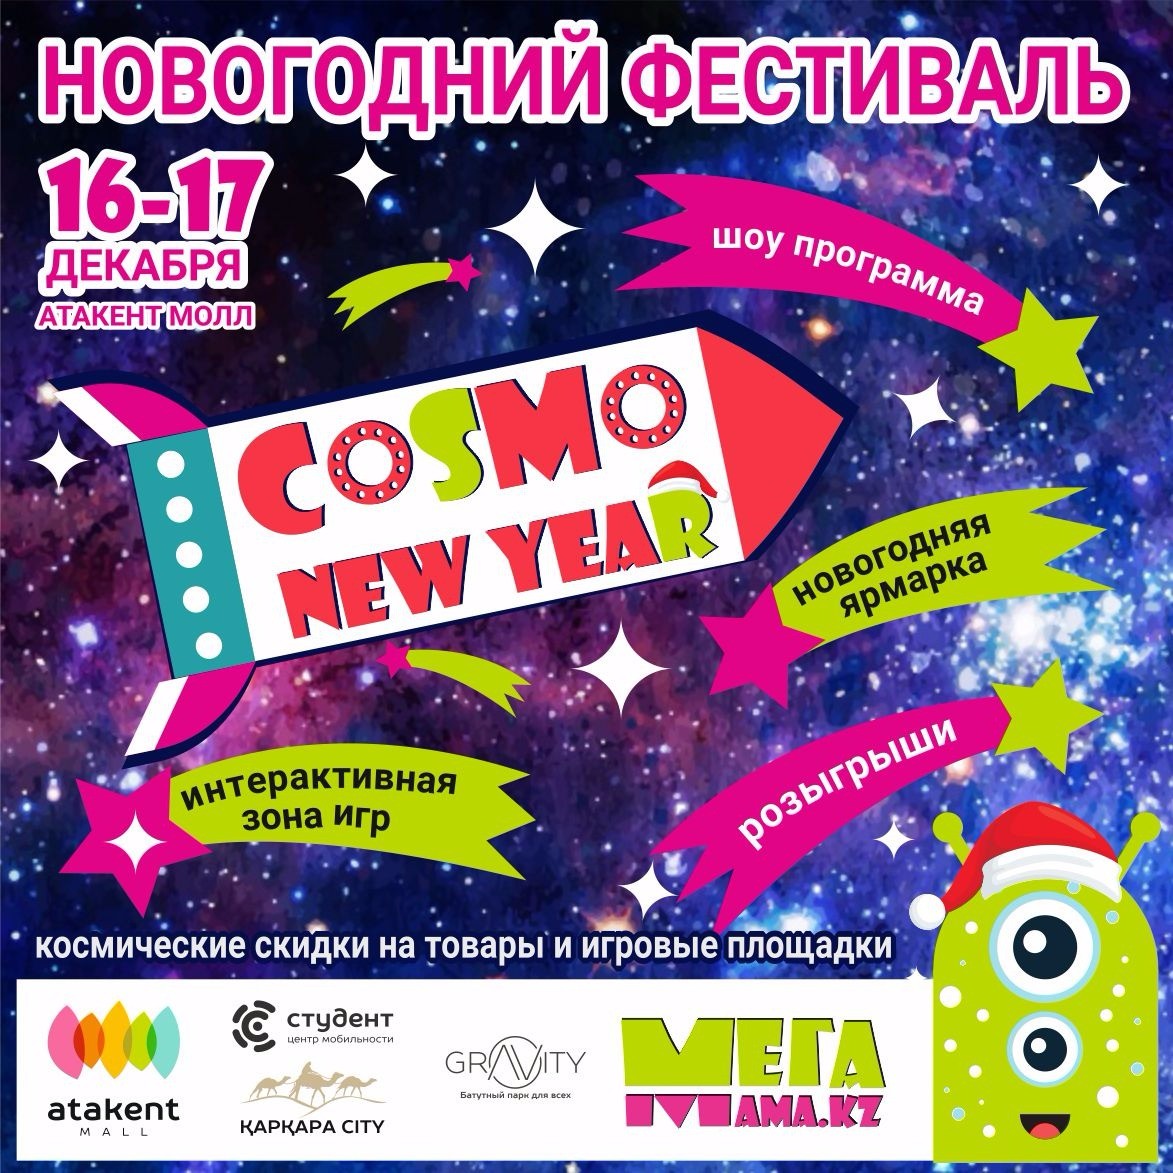 Новогодний фестиваль-ярмарка Cosmo New Year